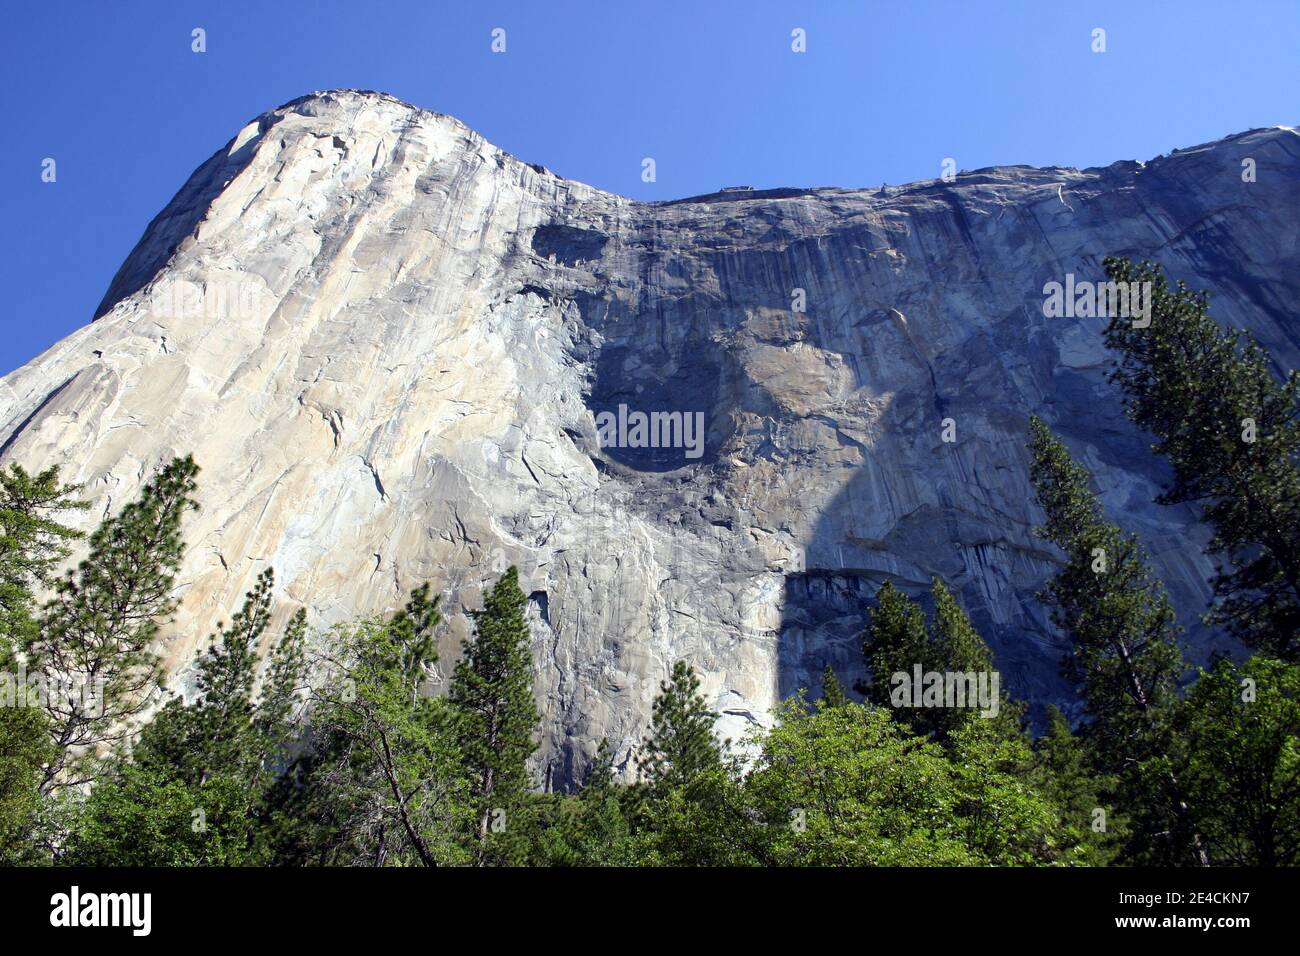 El Capitan, rock face, Yosemite National Park, California, USA Stock Photo